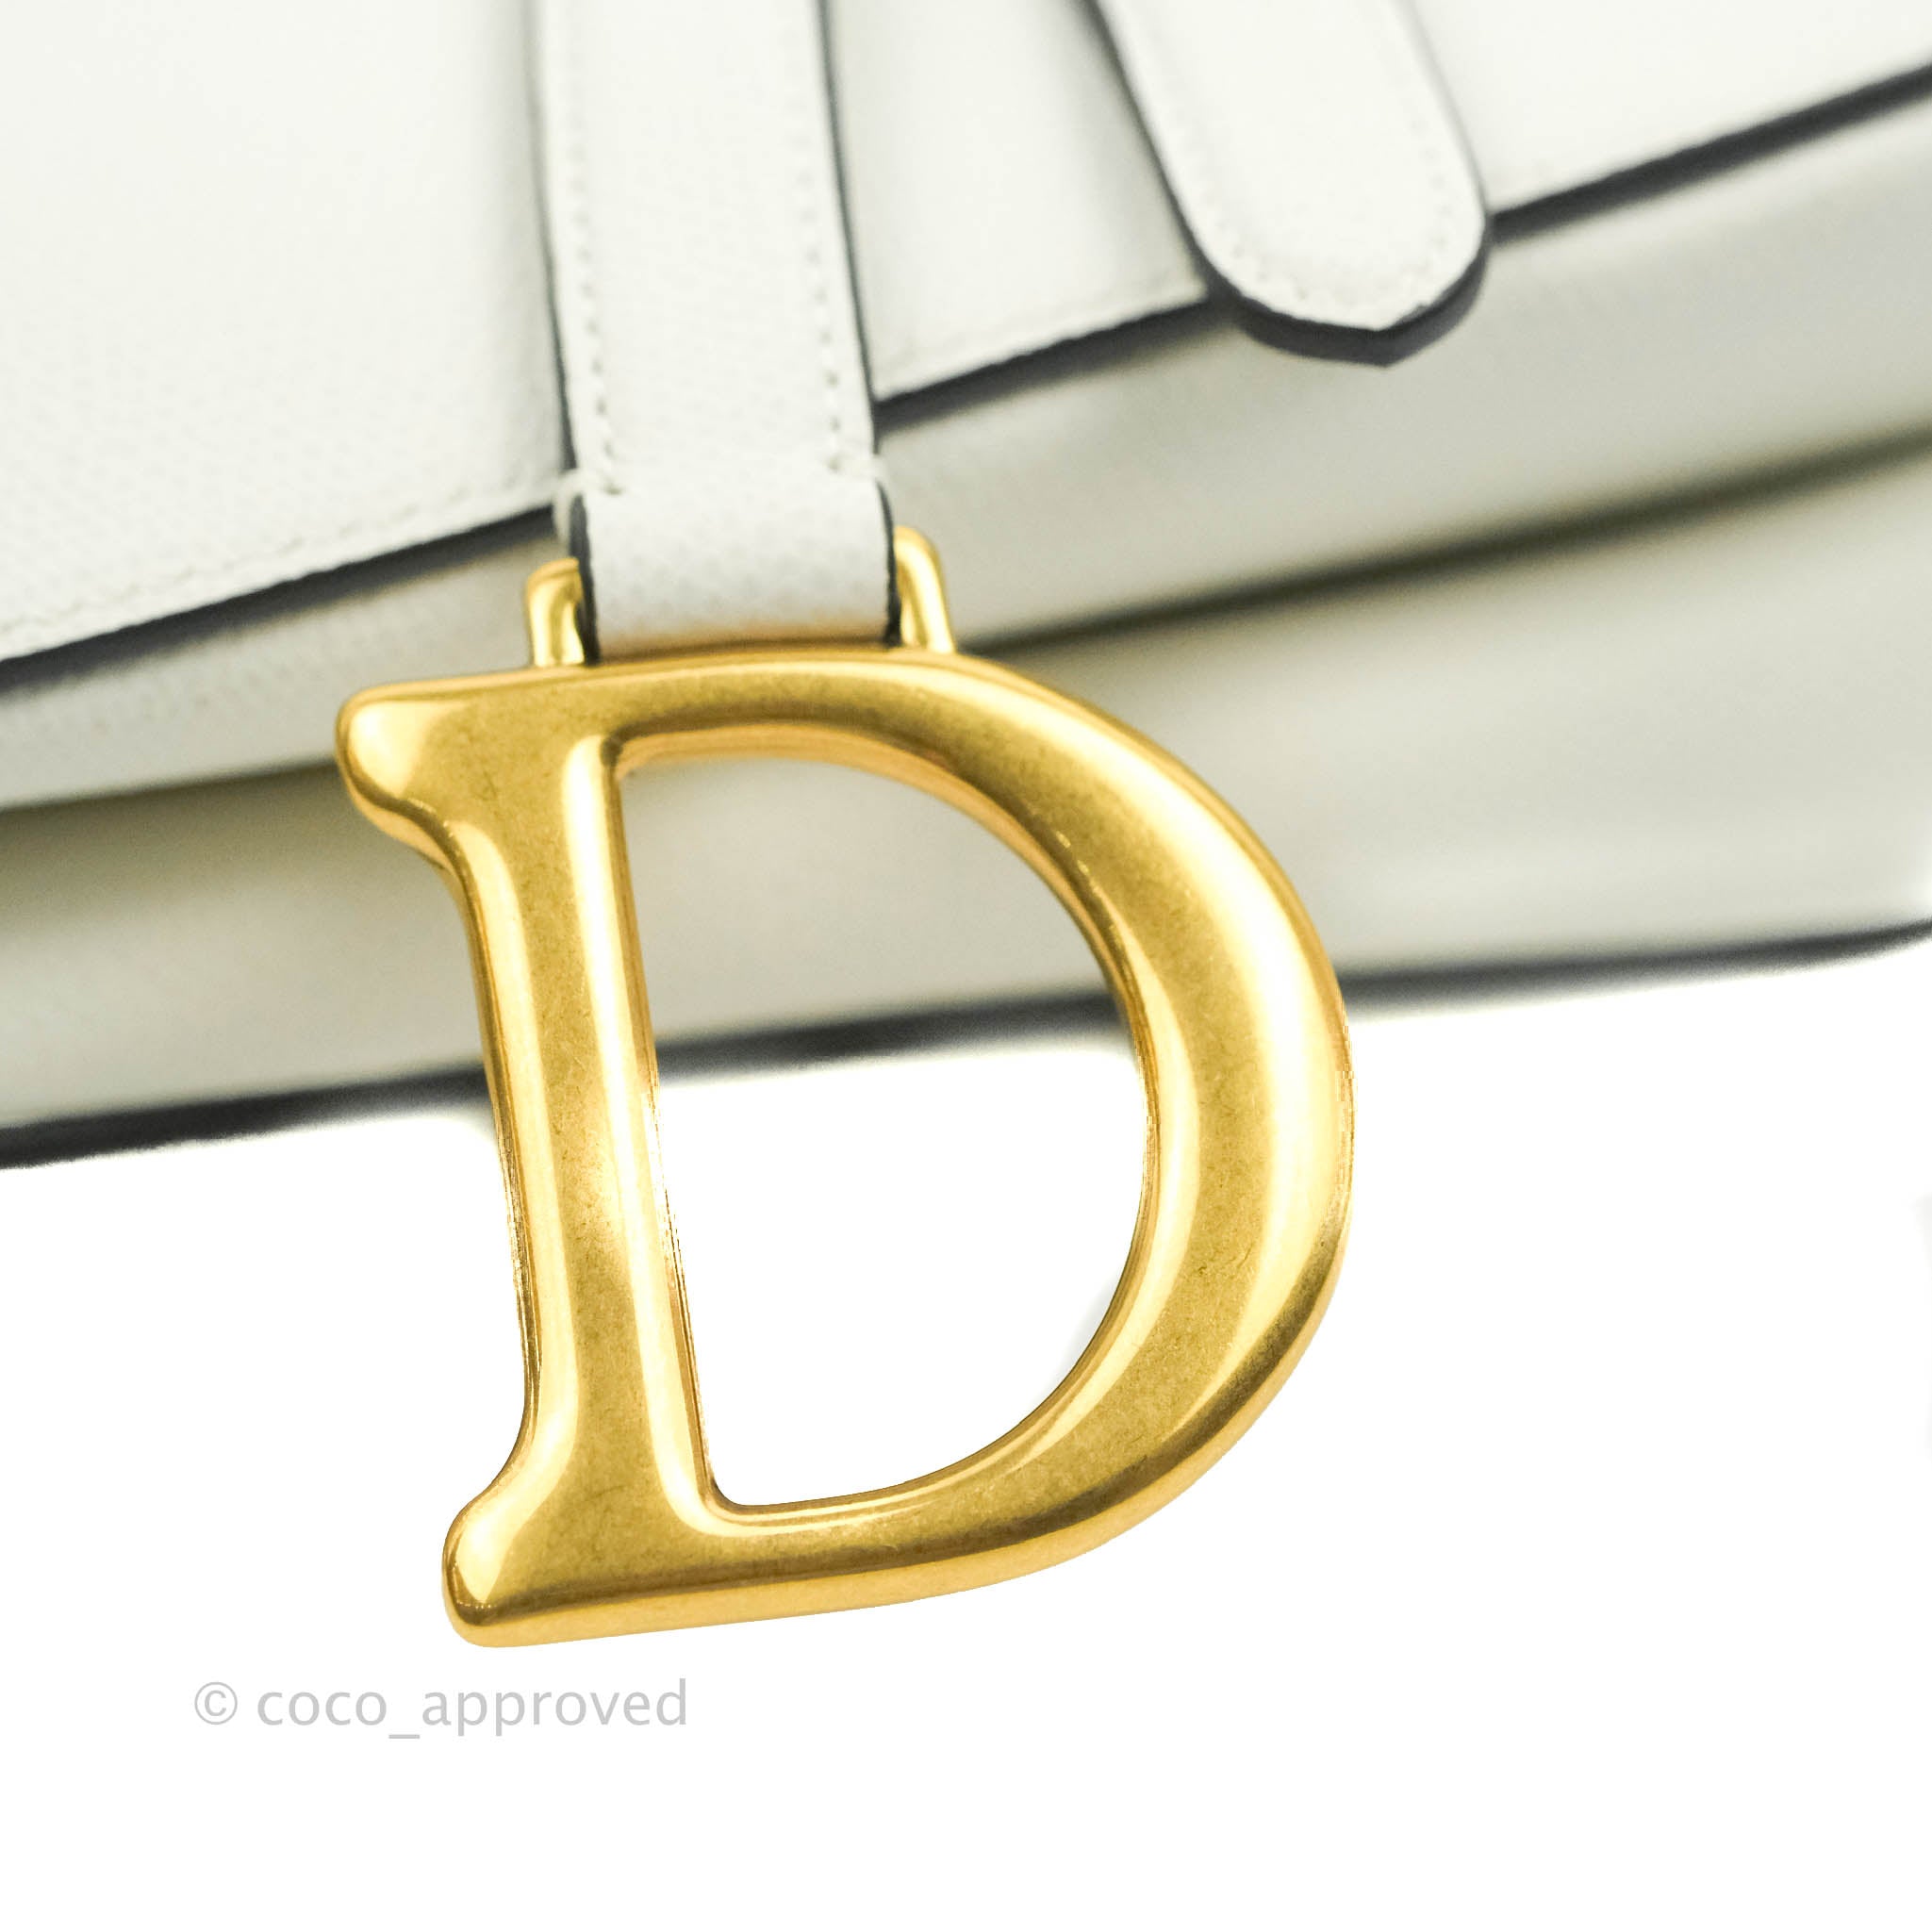 Christian Dior Saddle Bag Camel and Gold - Handbagholic